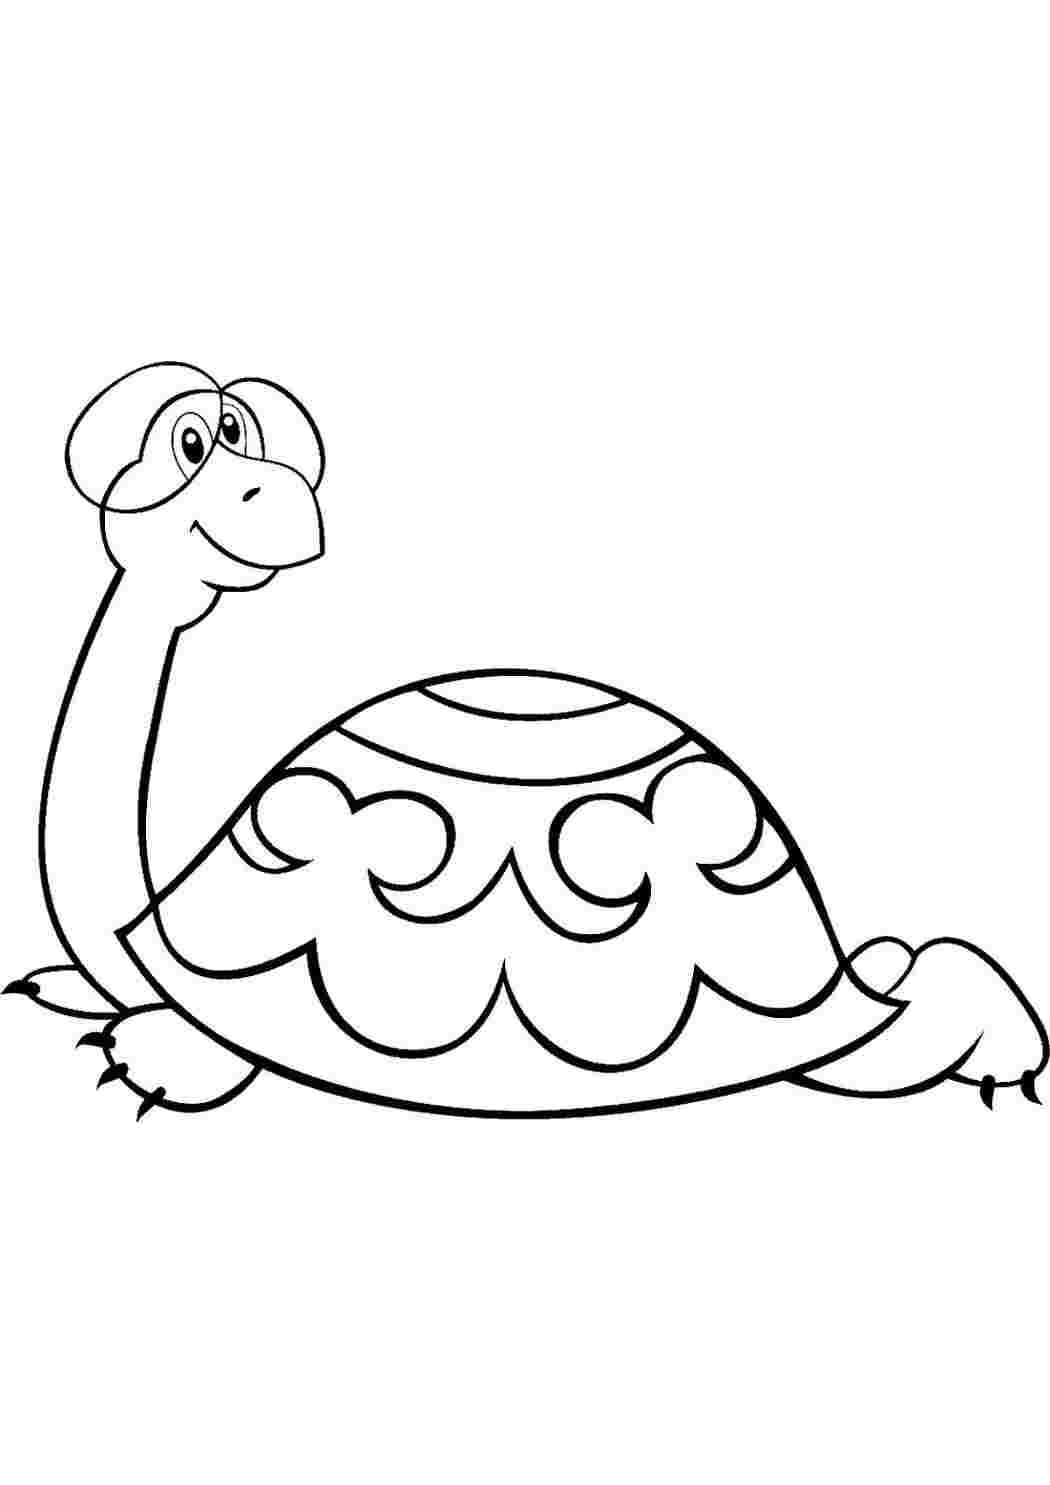 Раскраски черепахи - Для печати - Бесплатно - Kids Drawing Hub